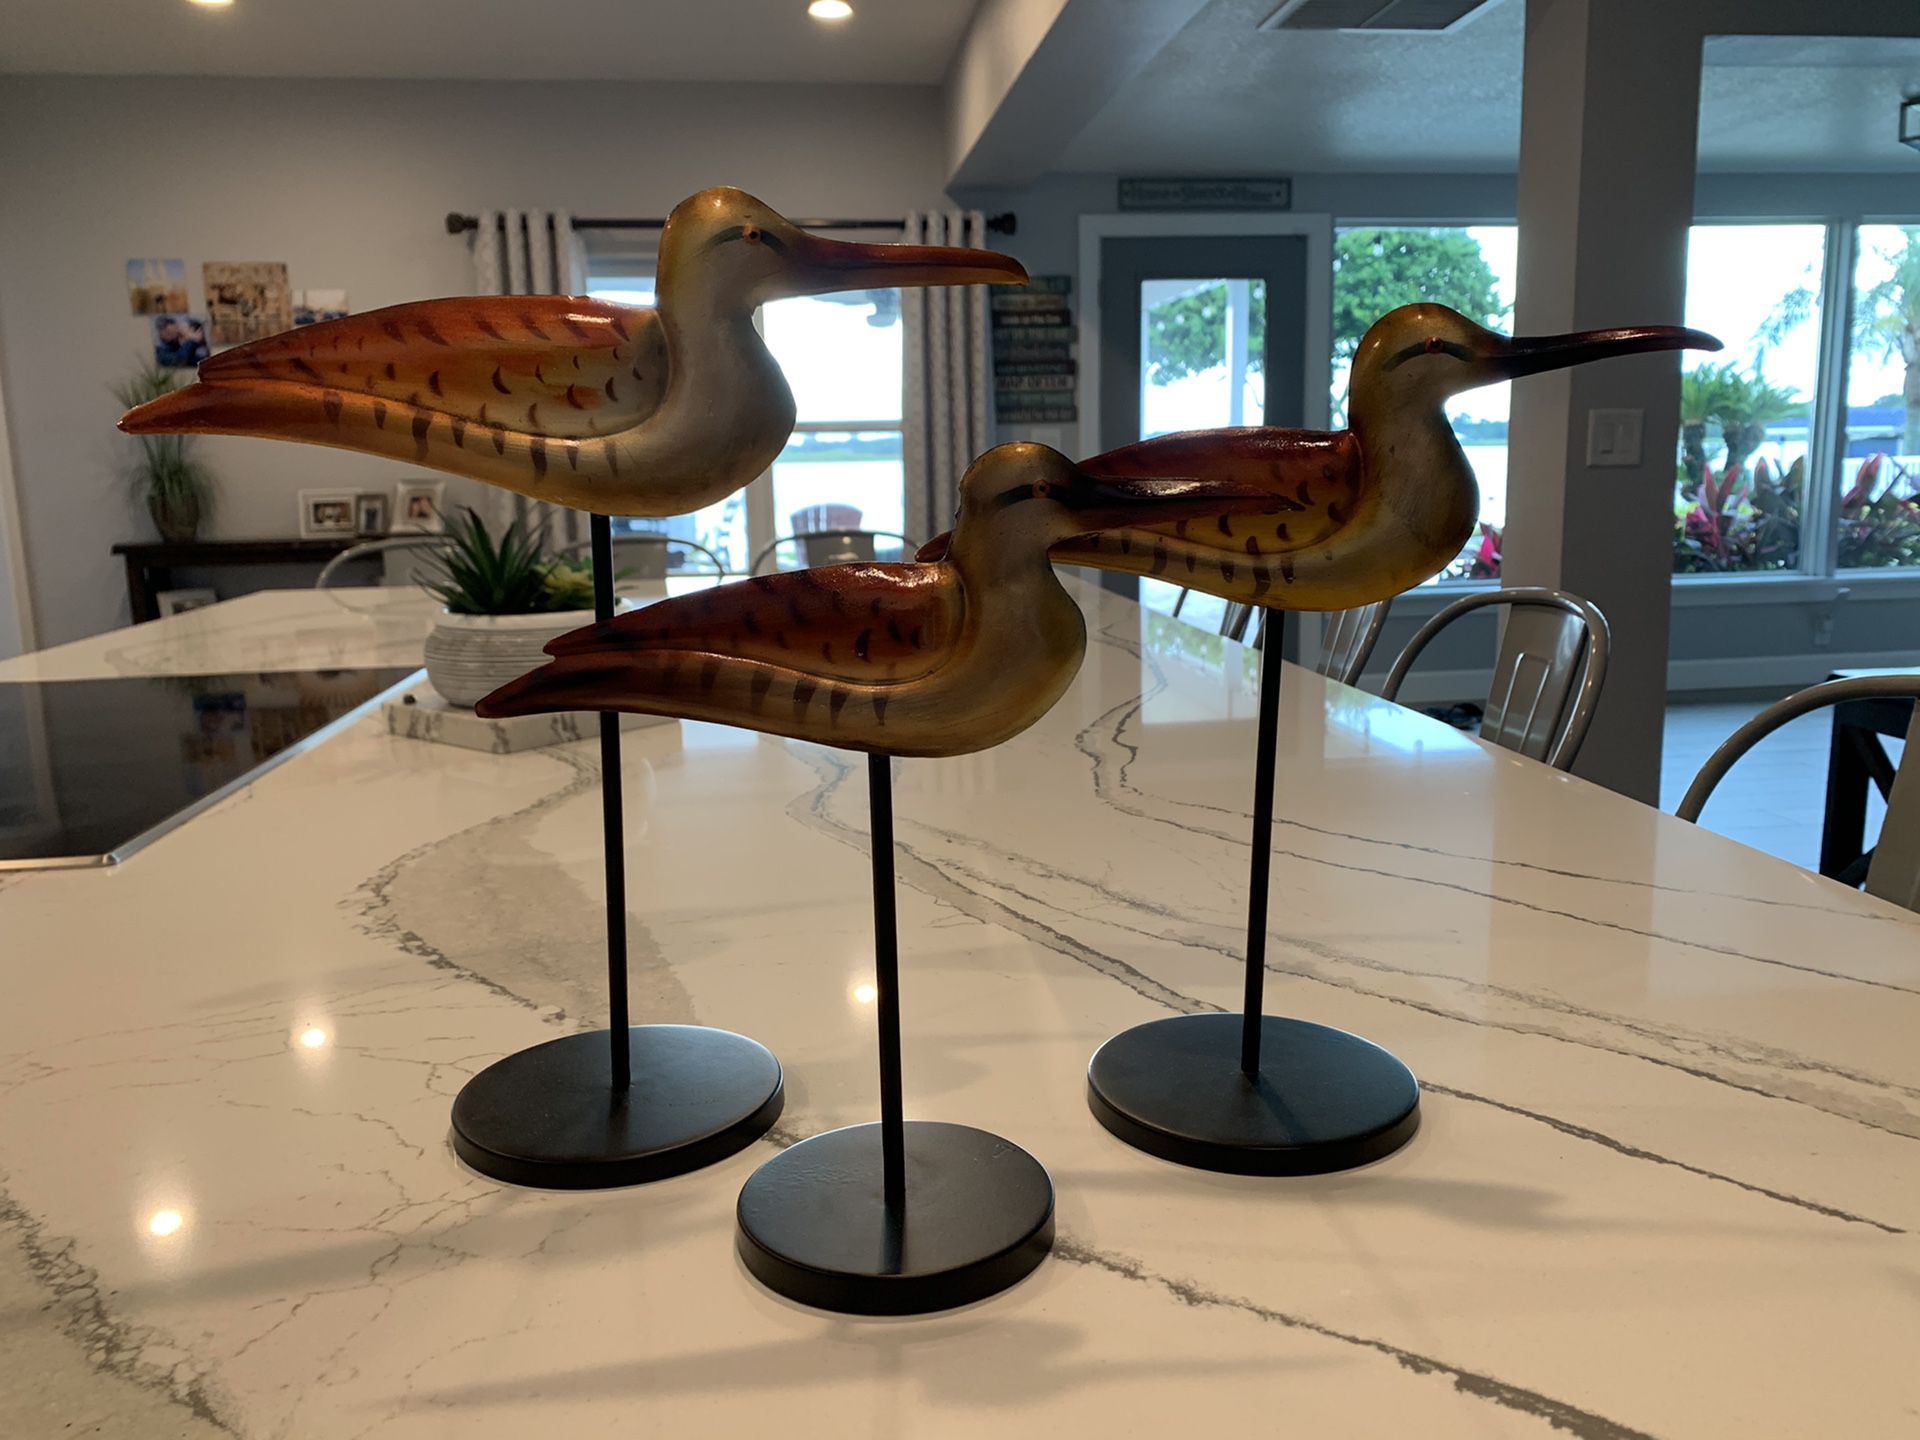 Set of three decorative birds